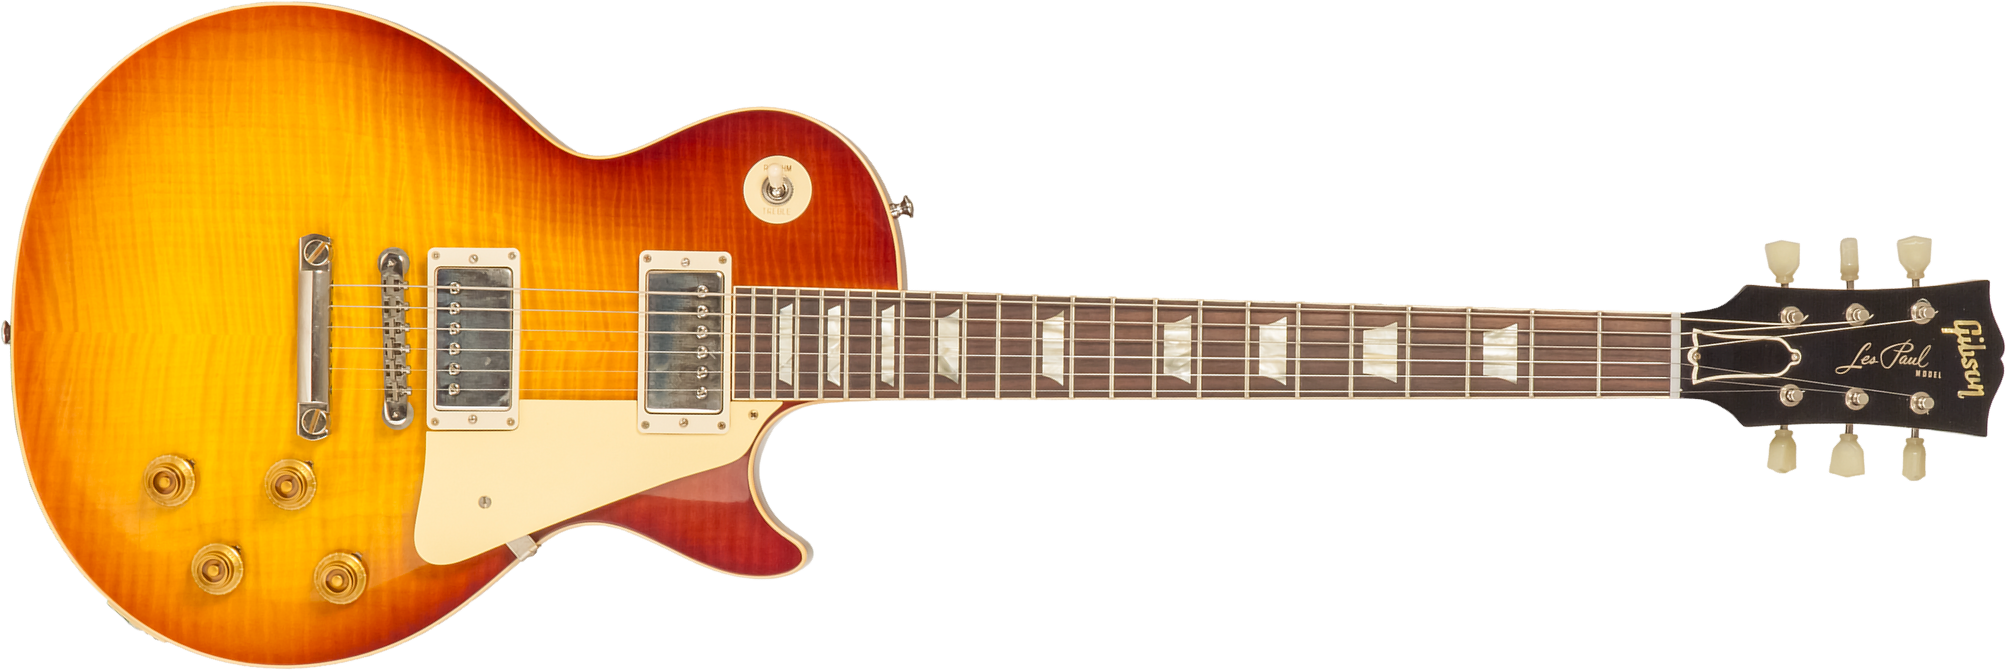 Gibson Custom Shop M2m Les Paul Standard 1959 Reissue 2h Ht Rw #932118 - Murphy Lab Ultra Light Aged Slow Iced Tea Fade - Enkel gesneden elektrische g